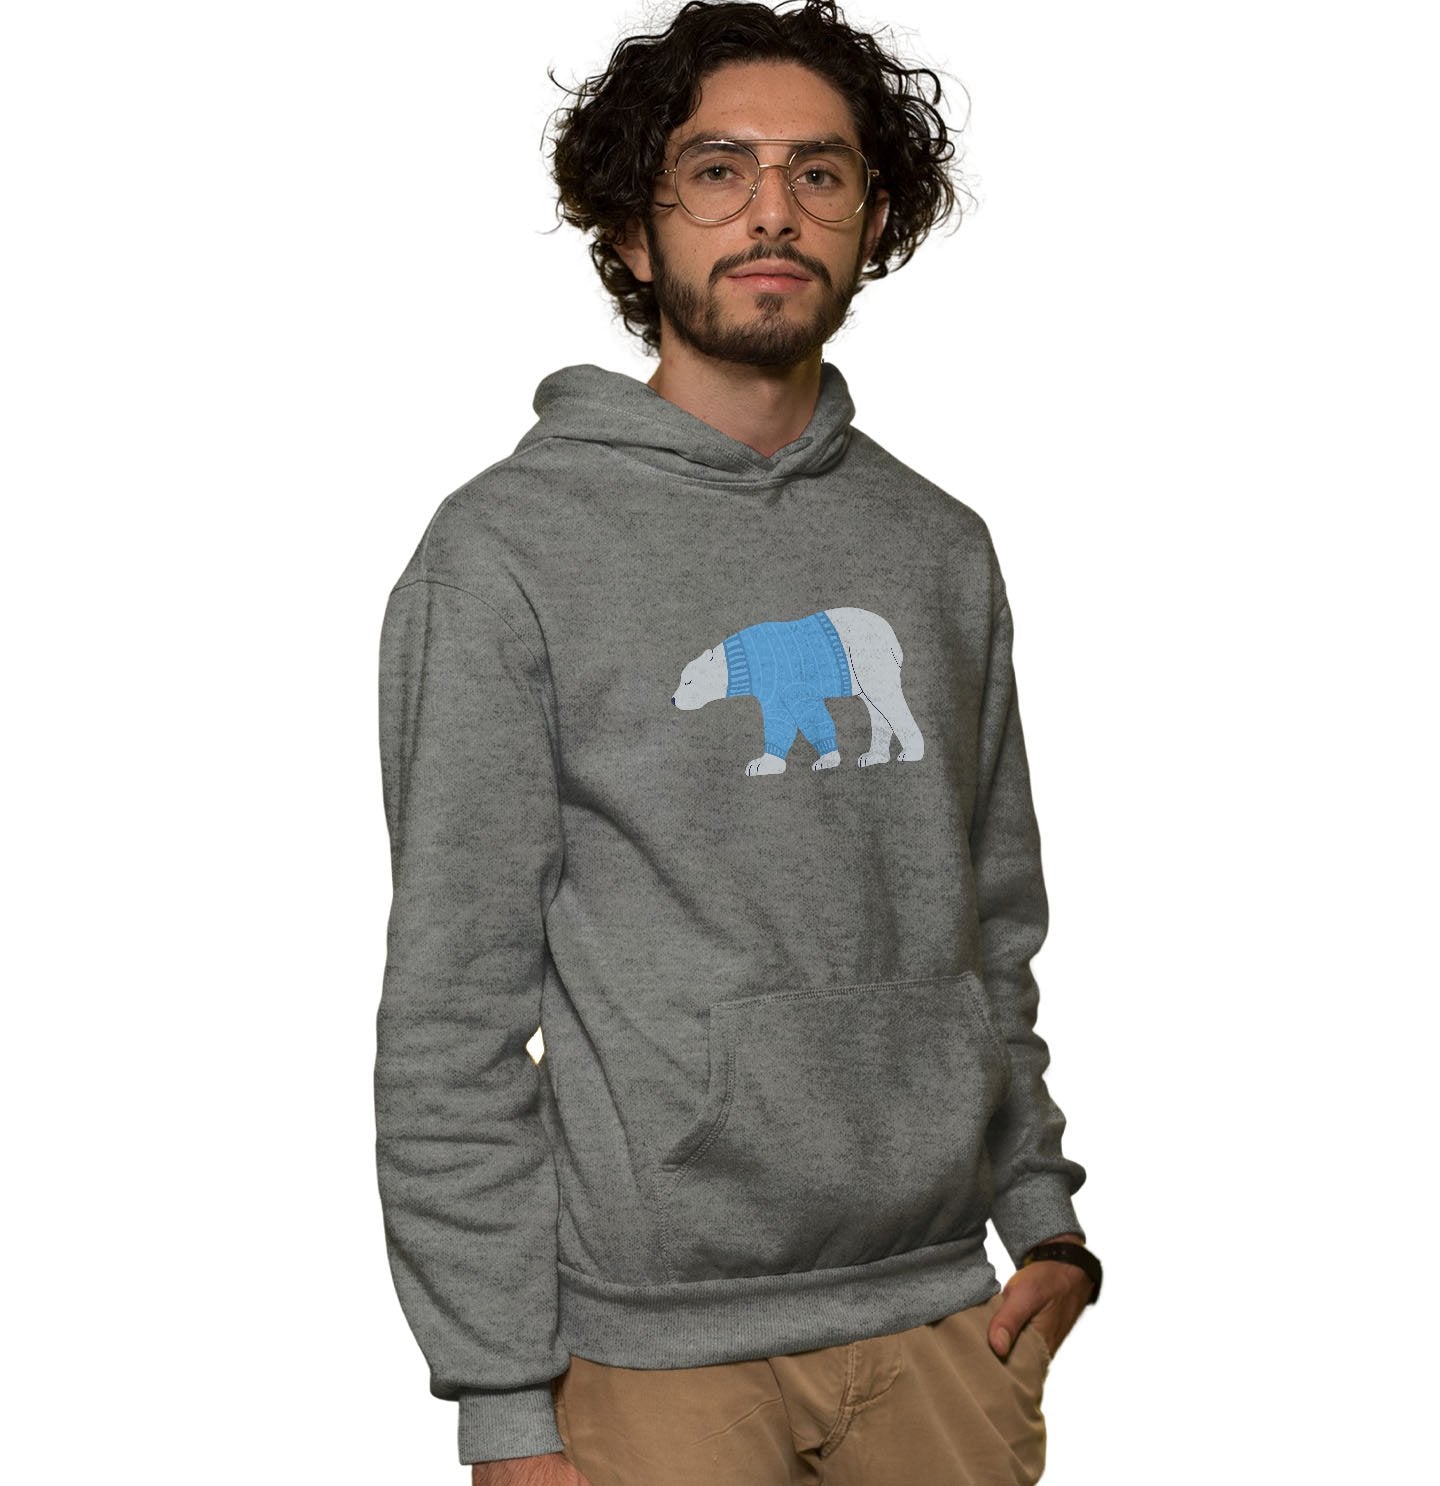 Sweater Polar Bear - Adult Unisex Hoodie Sweatshirt